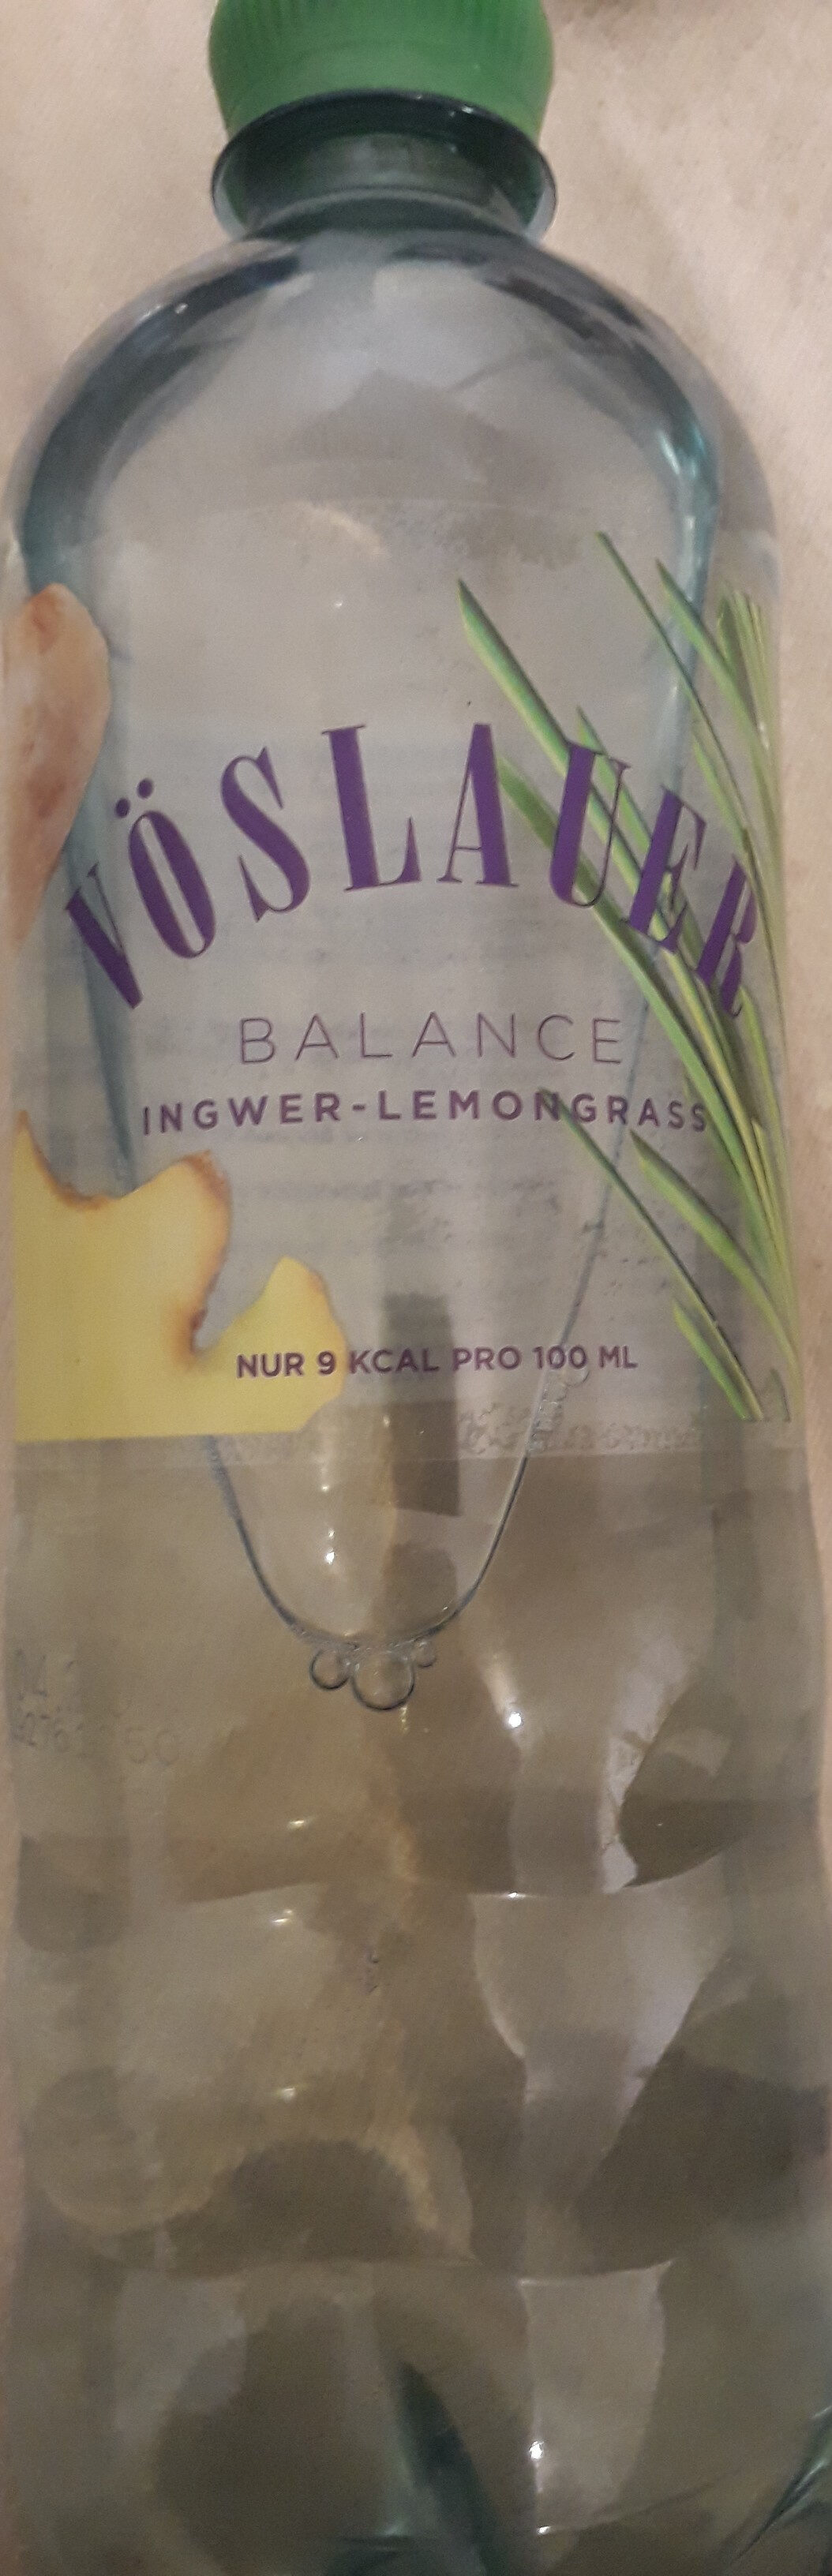 Balance Ingwer-Lemongras - Produkt